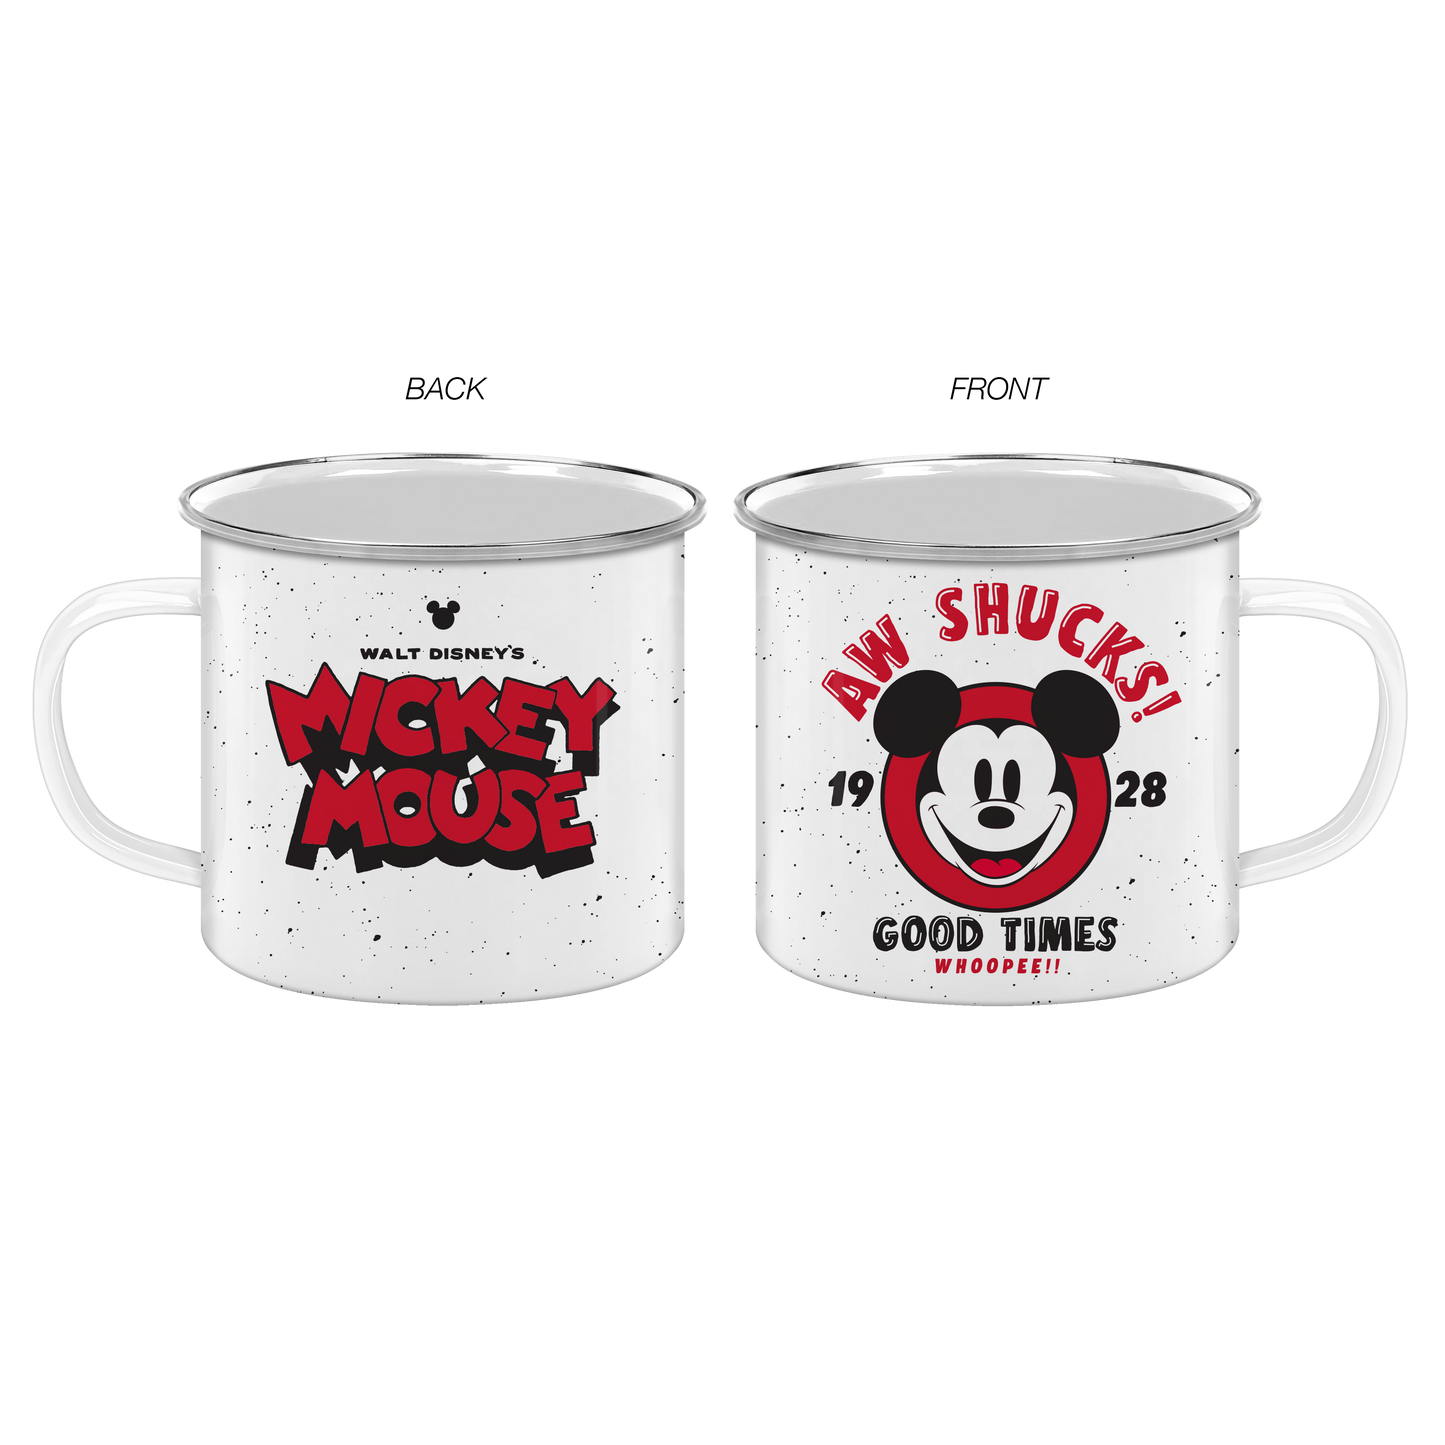 Mickey Mouse "Aw Shucks" Enamel Mug